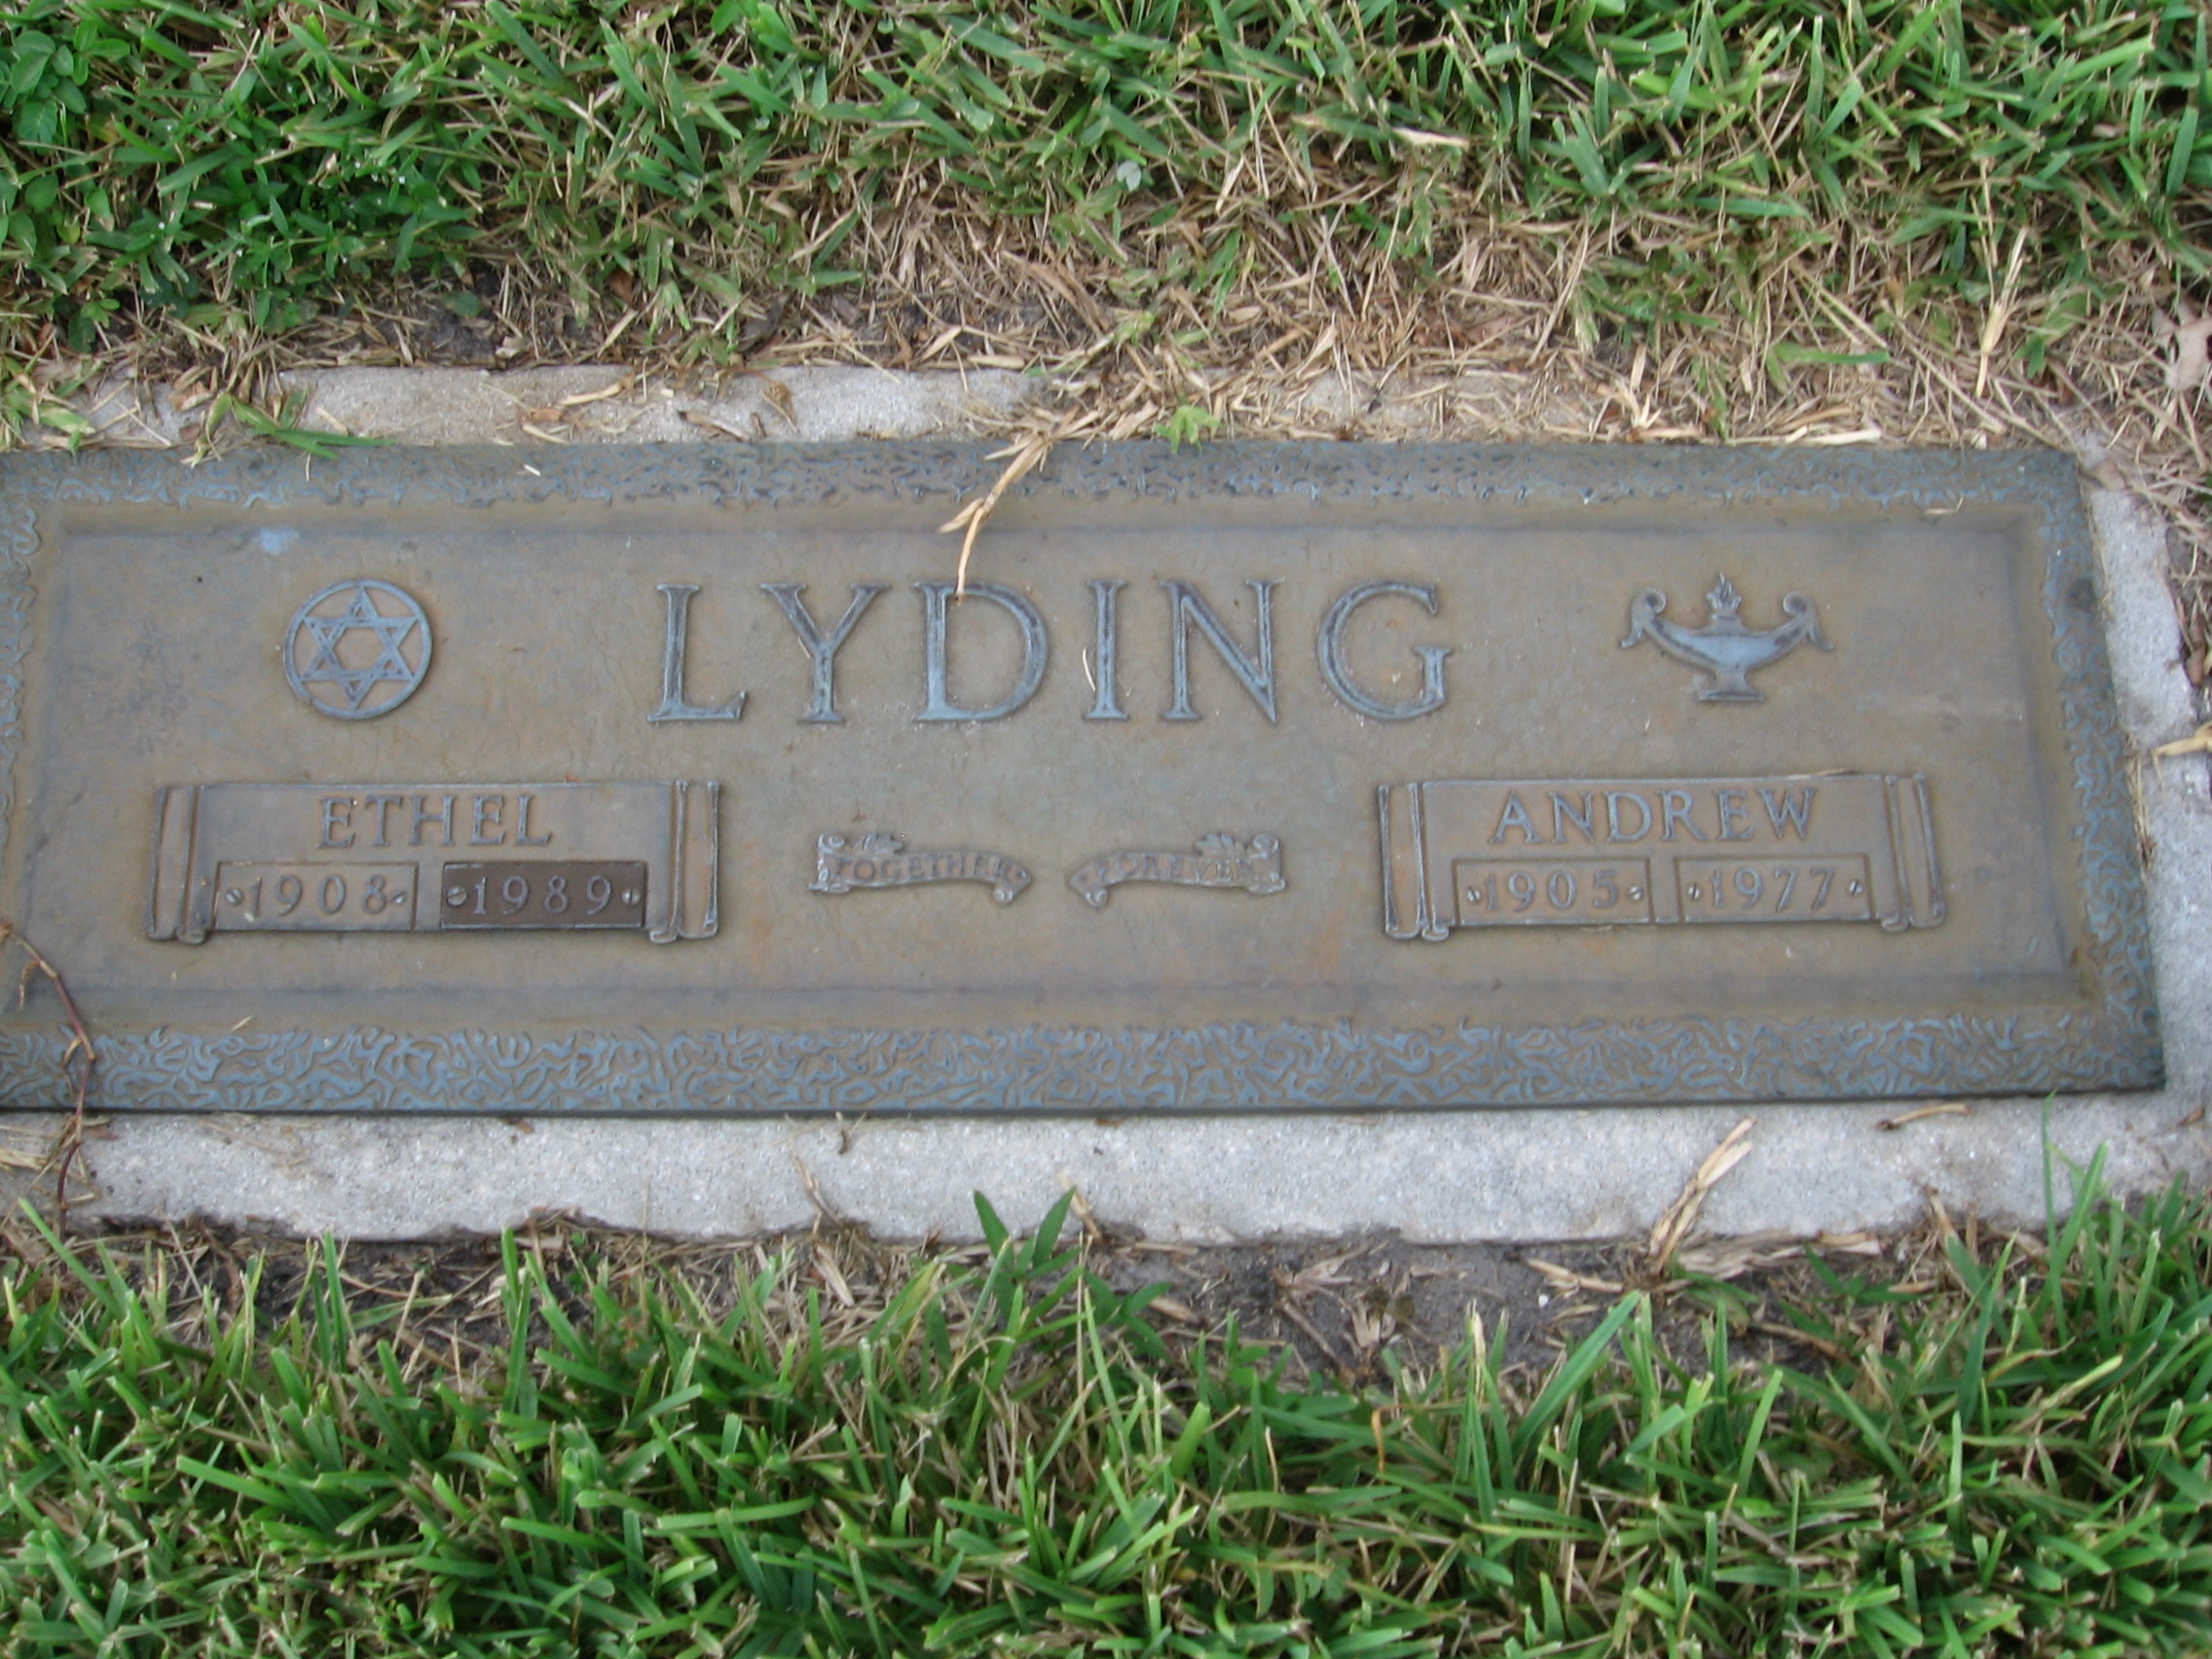 Ethel Lyding